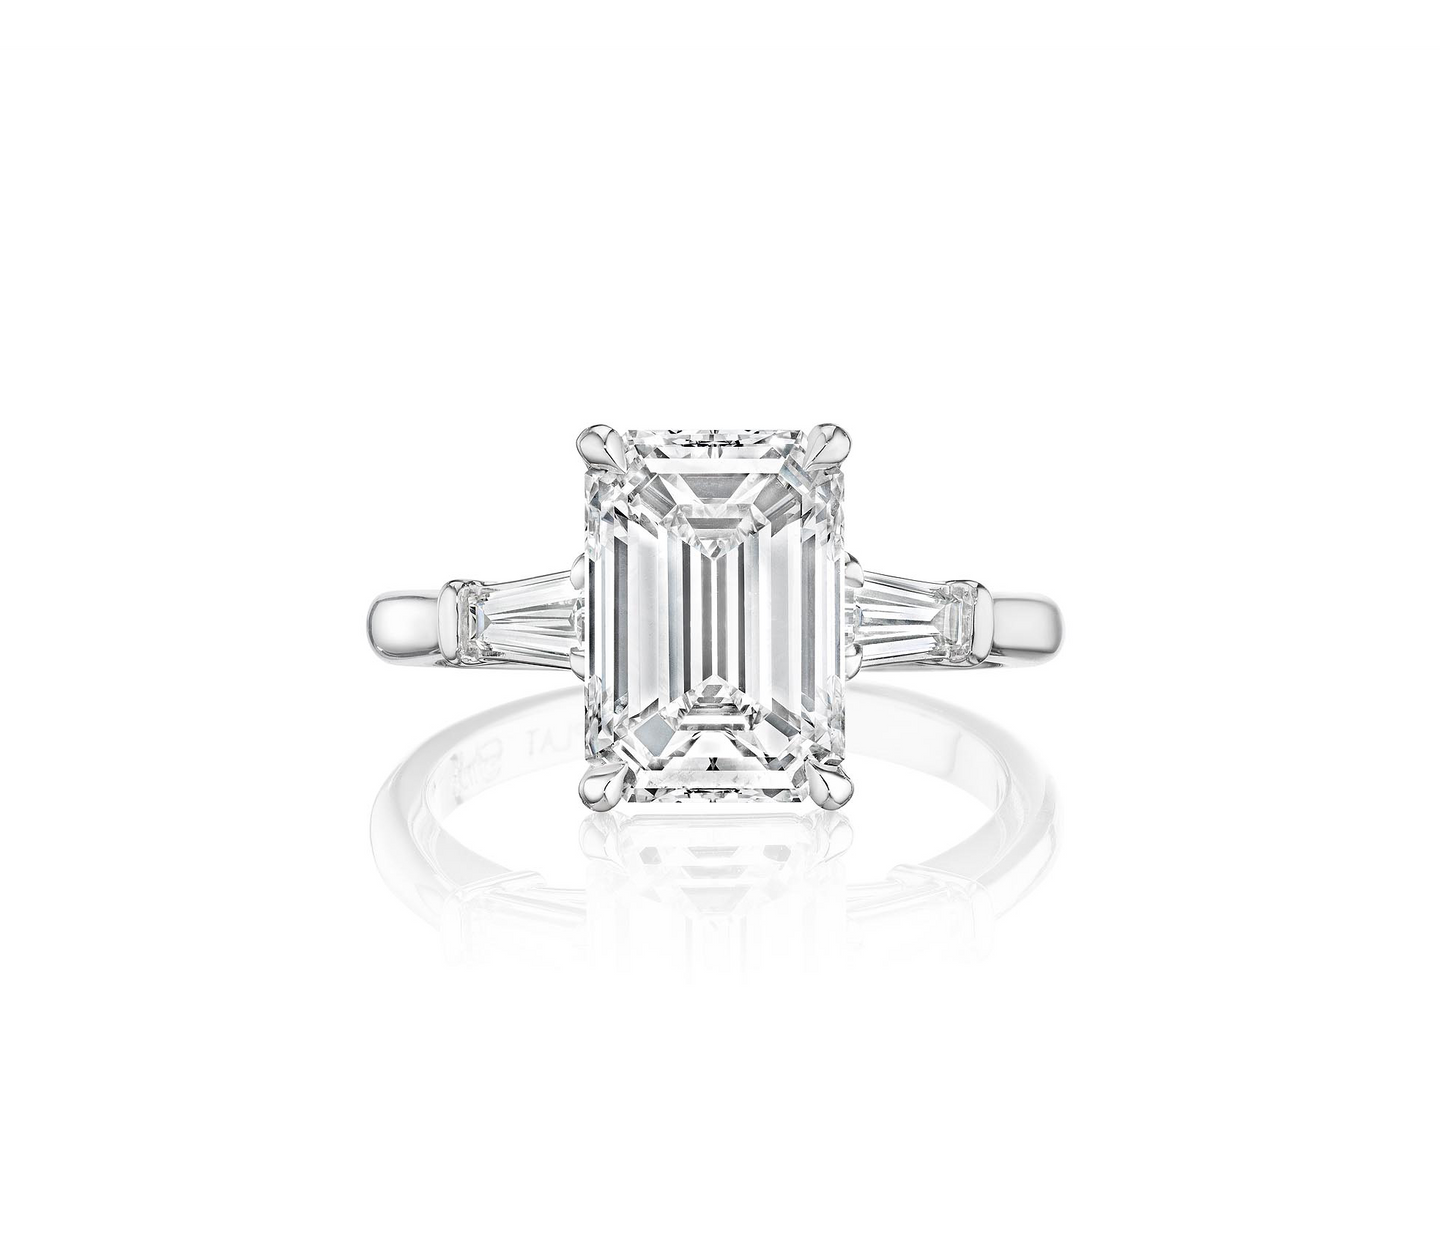 Wicklow Ring - 3.07 carat Emerald Cut Diamond Ring